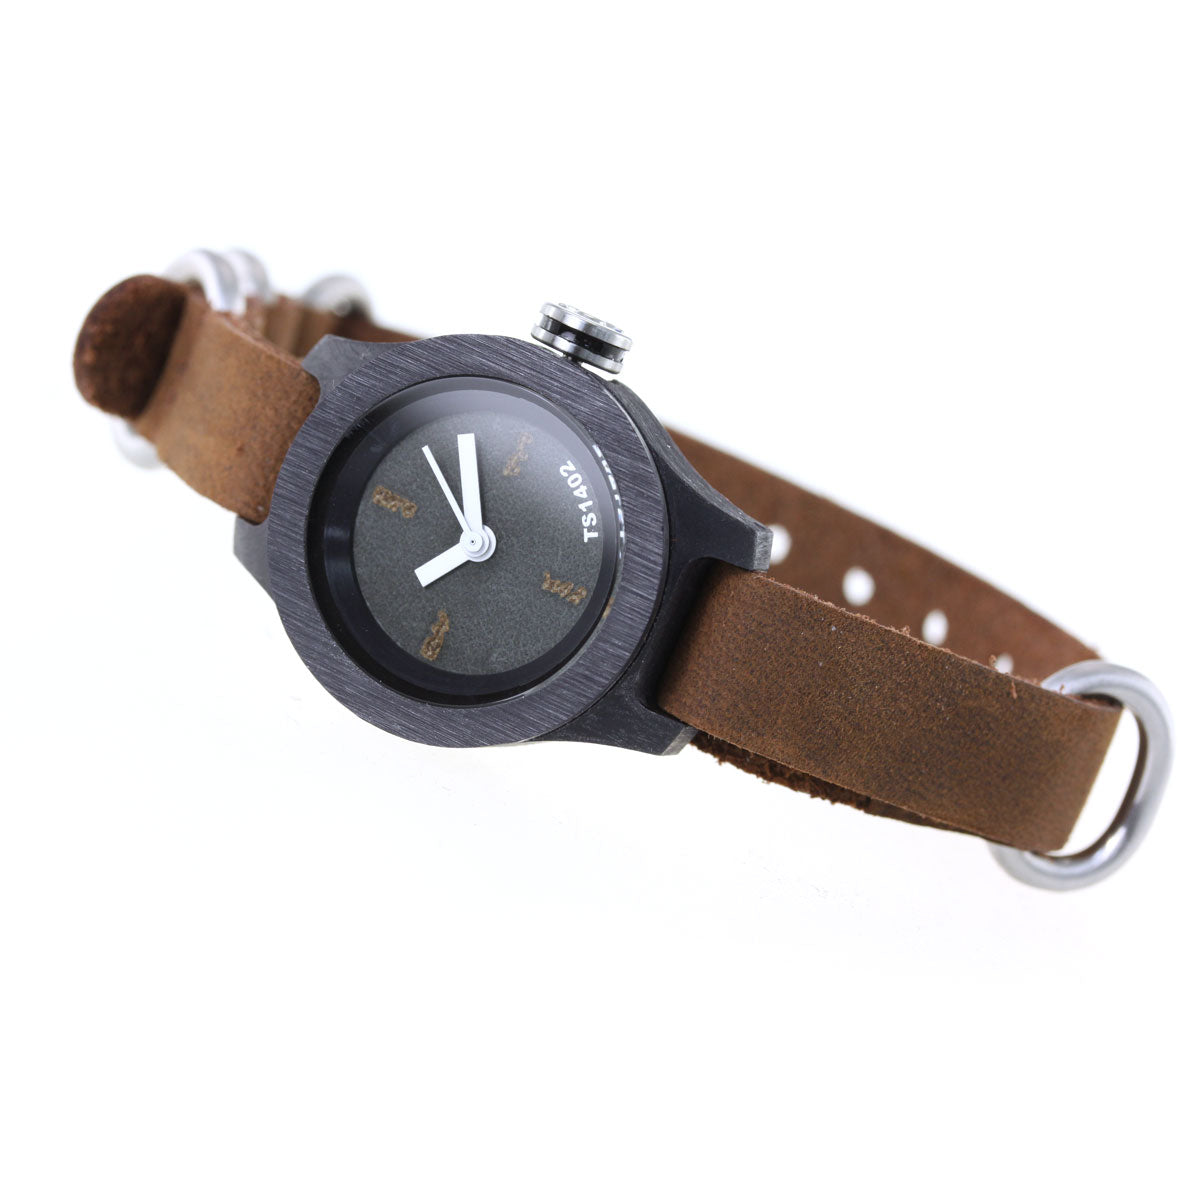 TACS タックス 腕時計 レディース ネイチャーエス NATURE S TS1402A